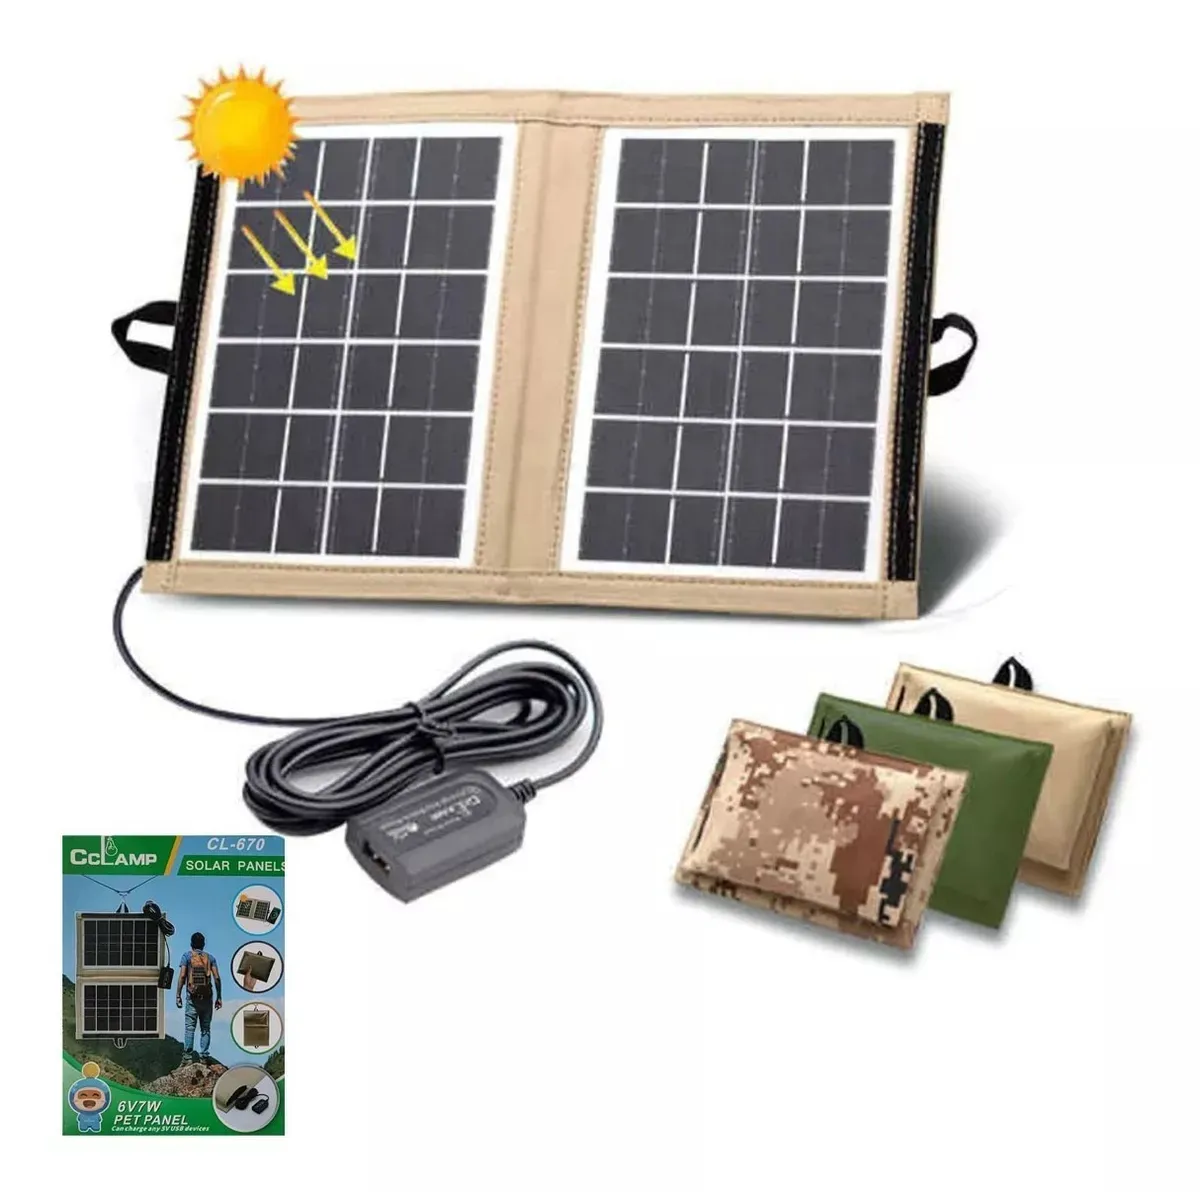 Panel Solar Portátil Viajero Recarga Celulares Y Baterías